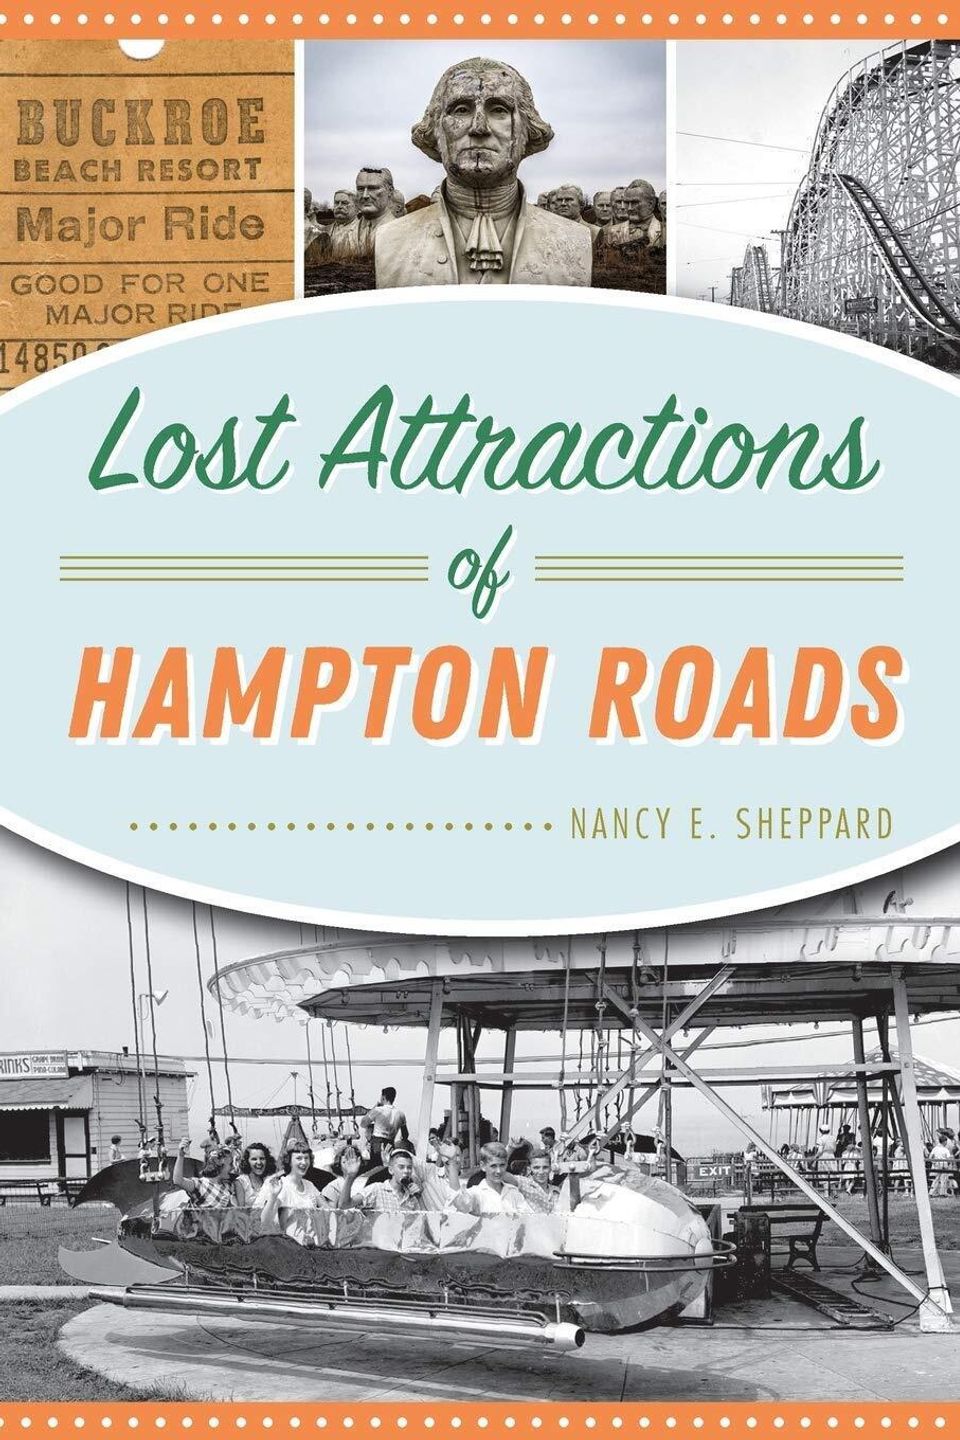 Lost attractions of hampton roads